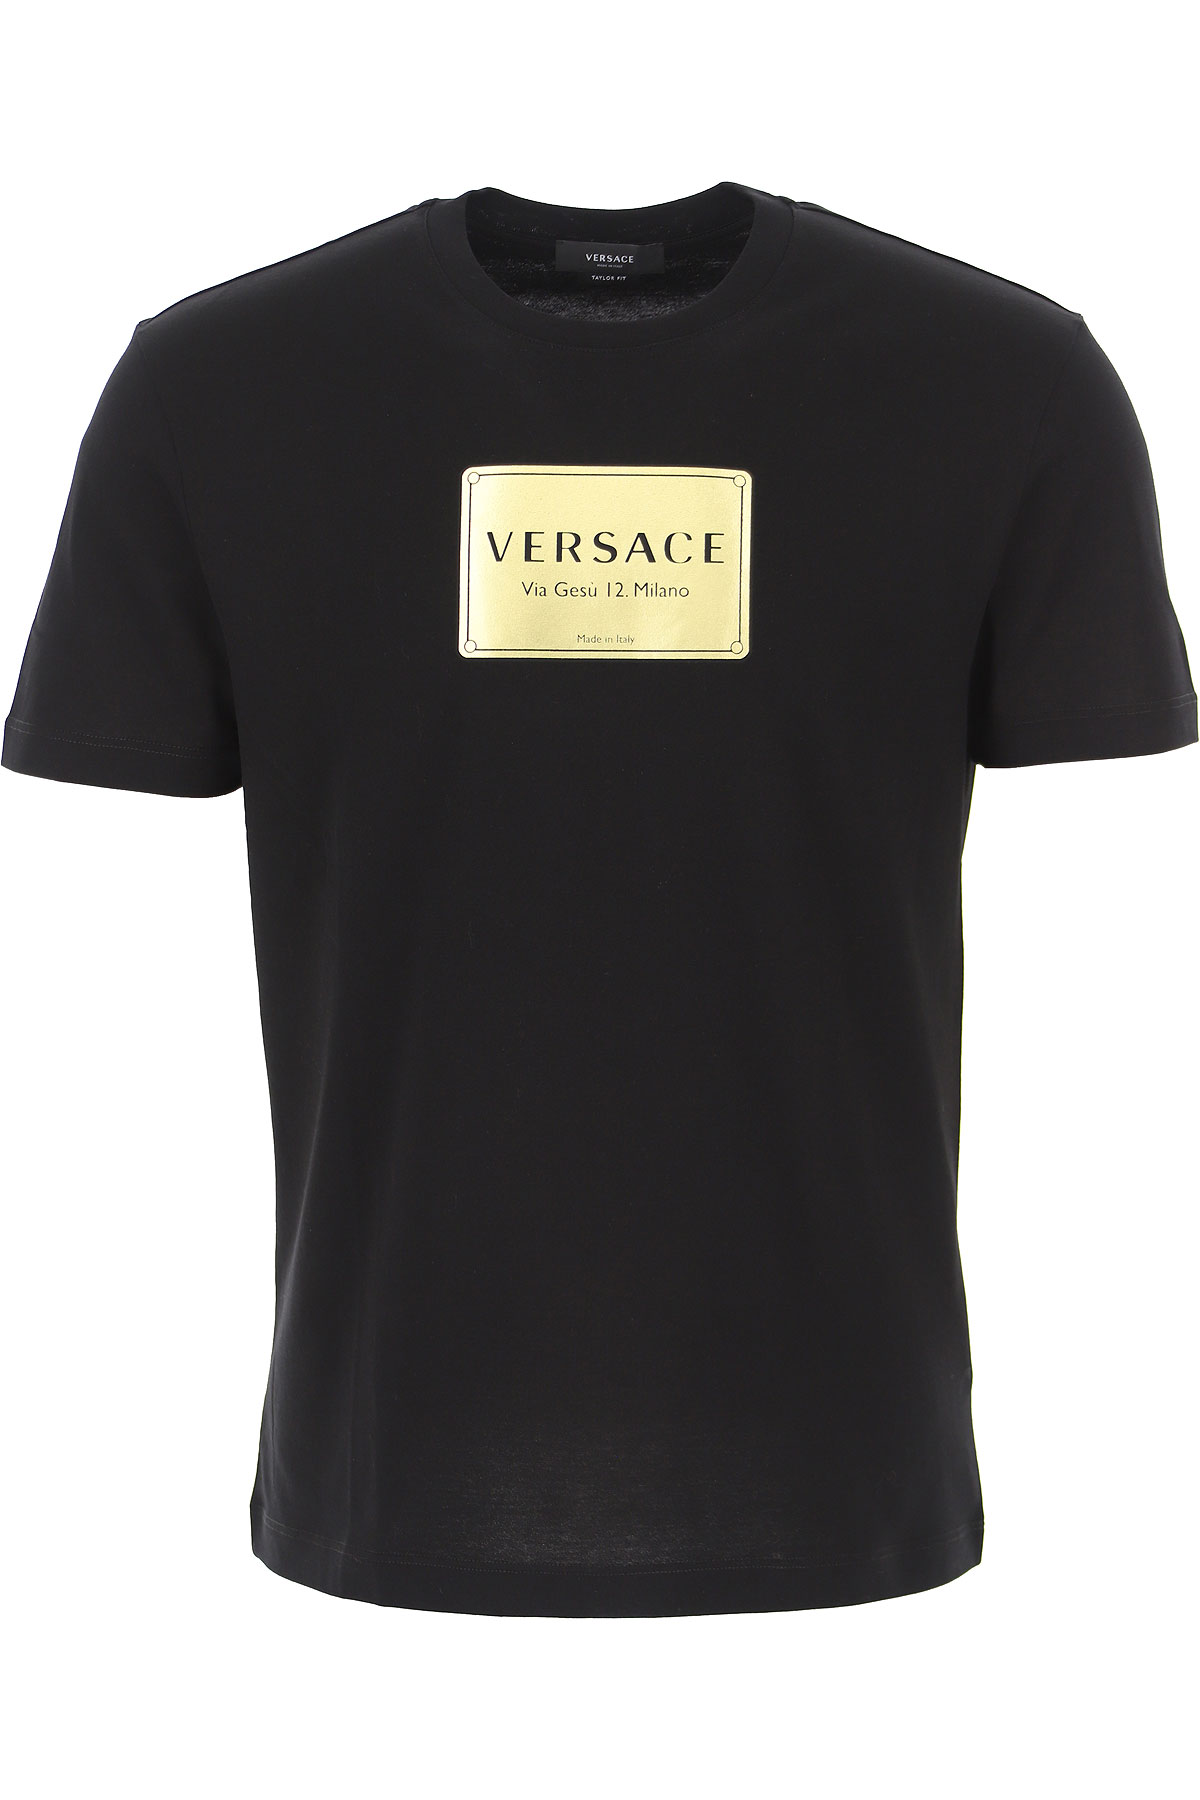 versace t shirt sale mens